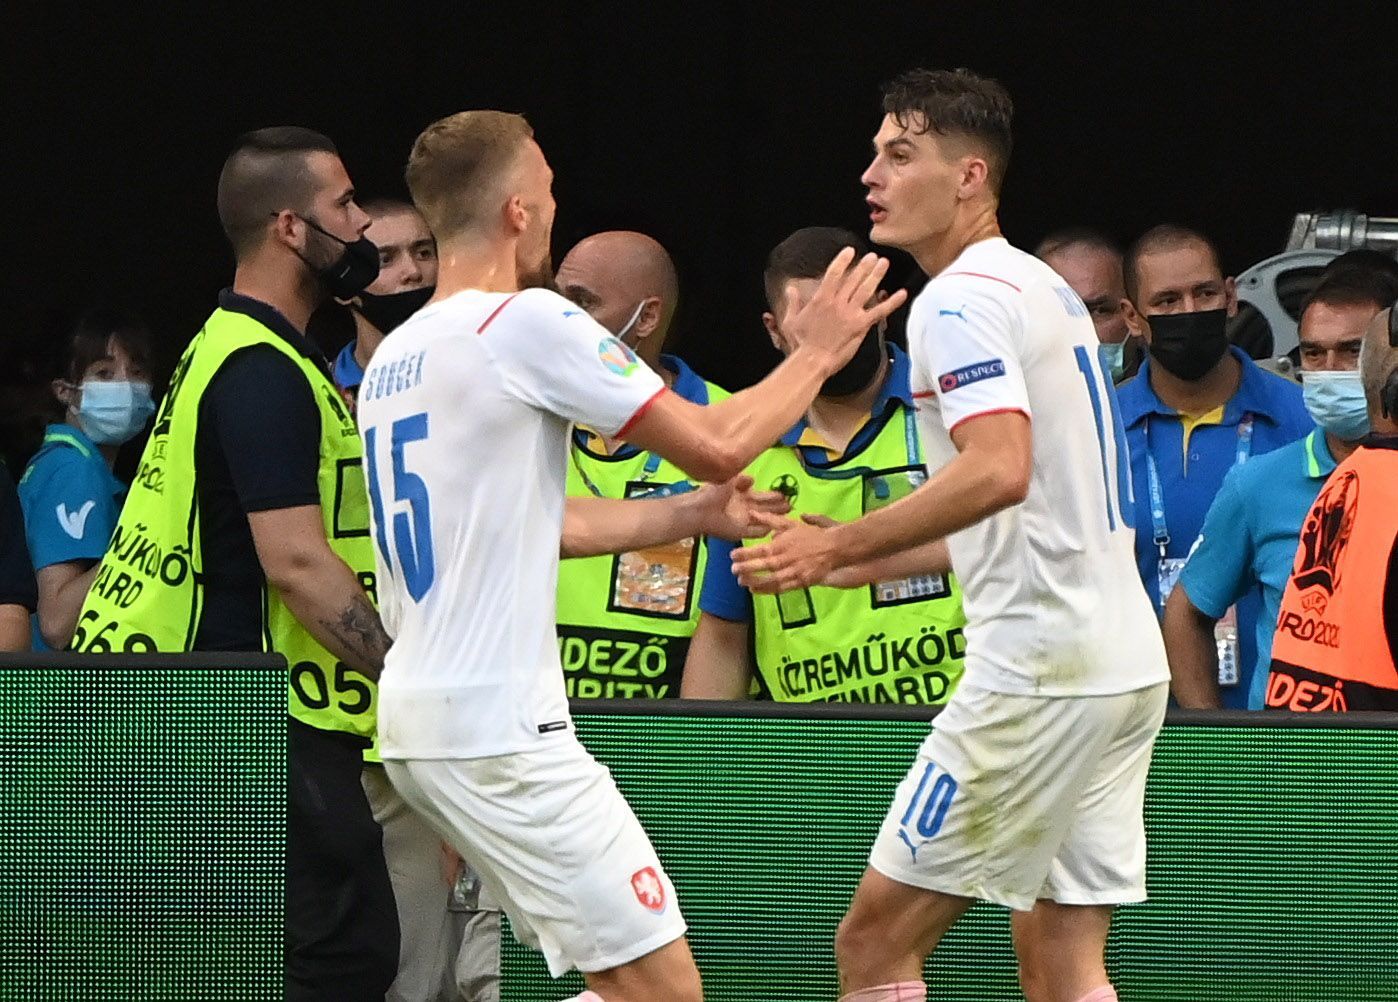 Tomáš Souček a Patrik Schick slaví gól v osmifinále Nizozemsko - Česko na ME 2020